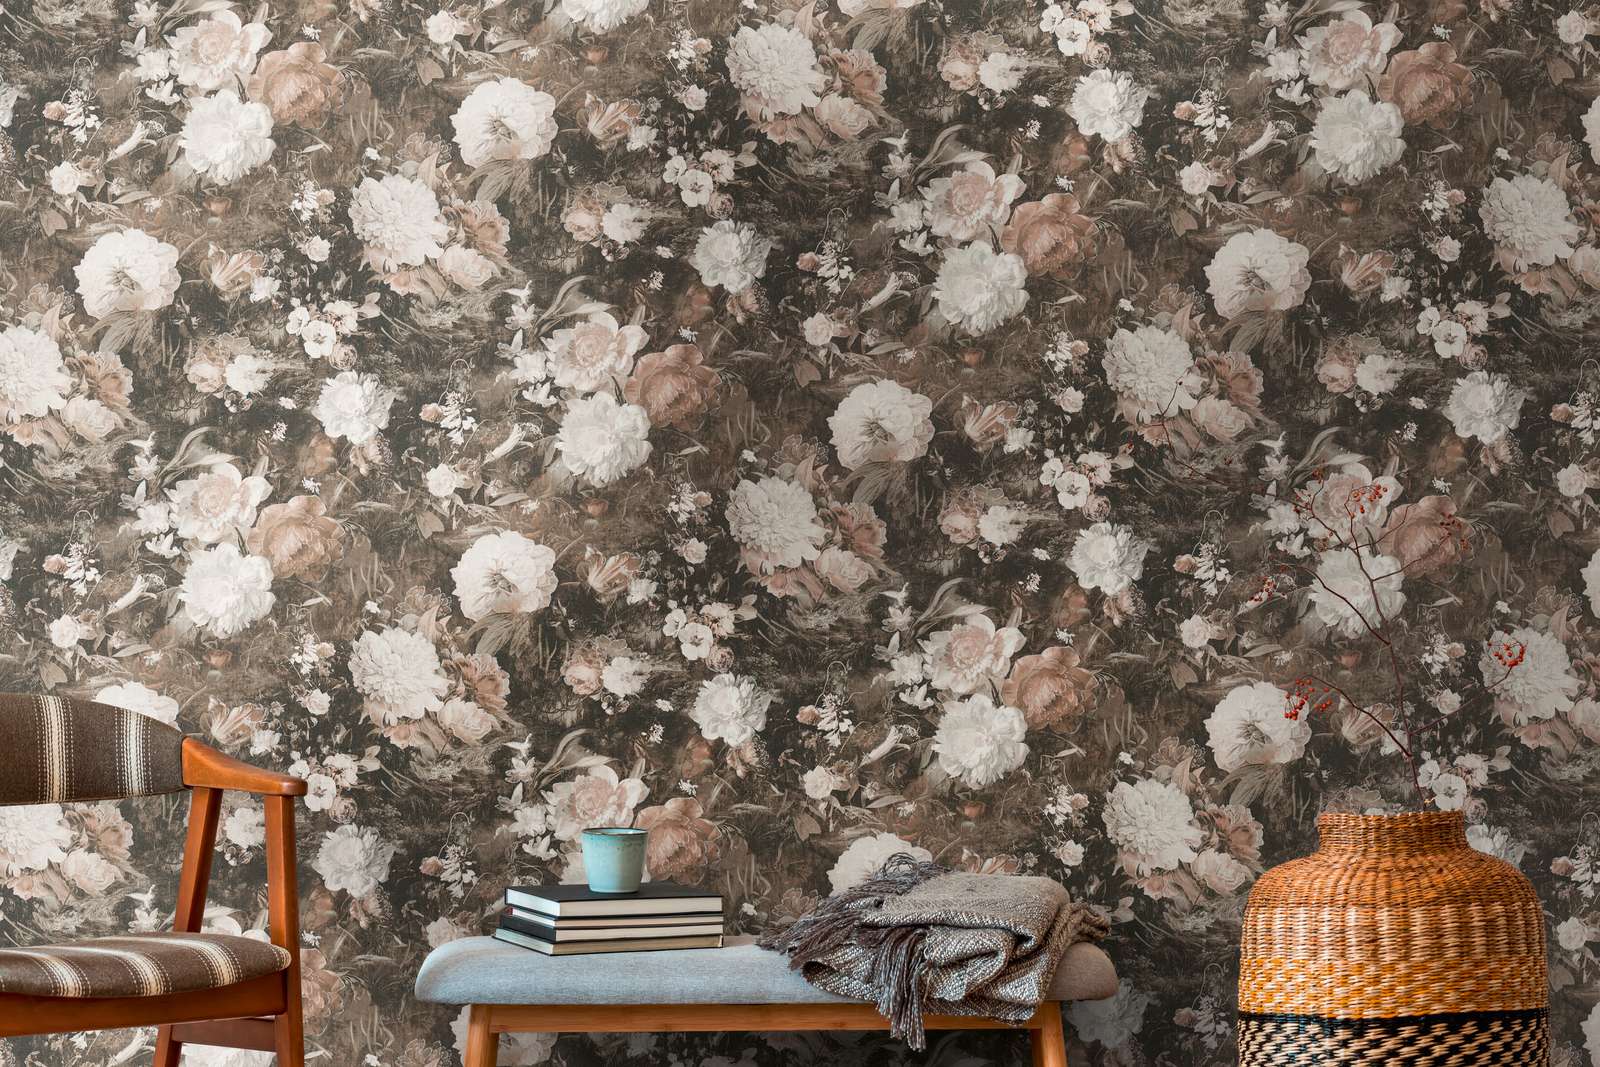             Vintage floral wallpaper classic rose pattern - cream, brown
        